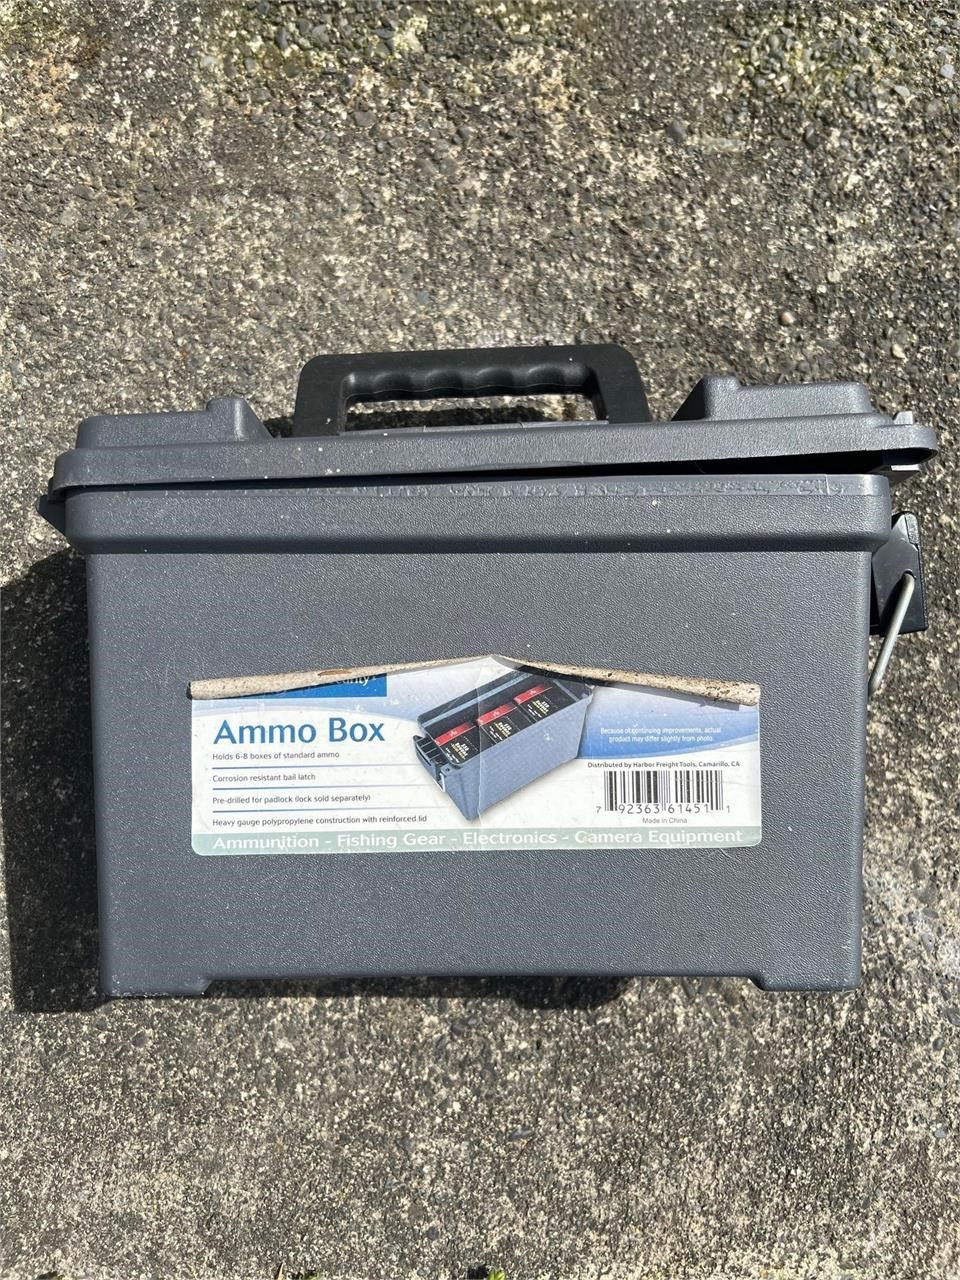 GRAY PLASTIC AMMO BOX